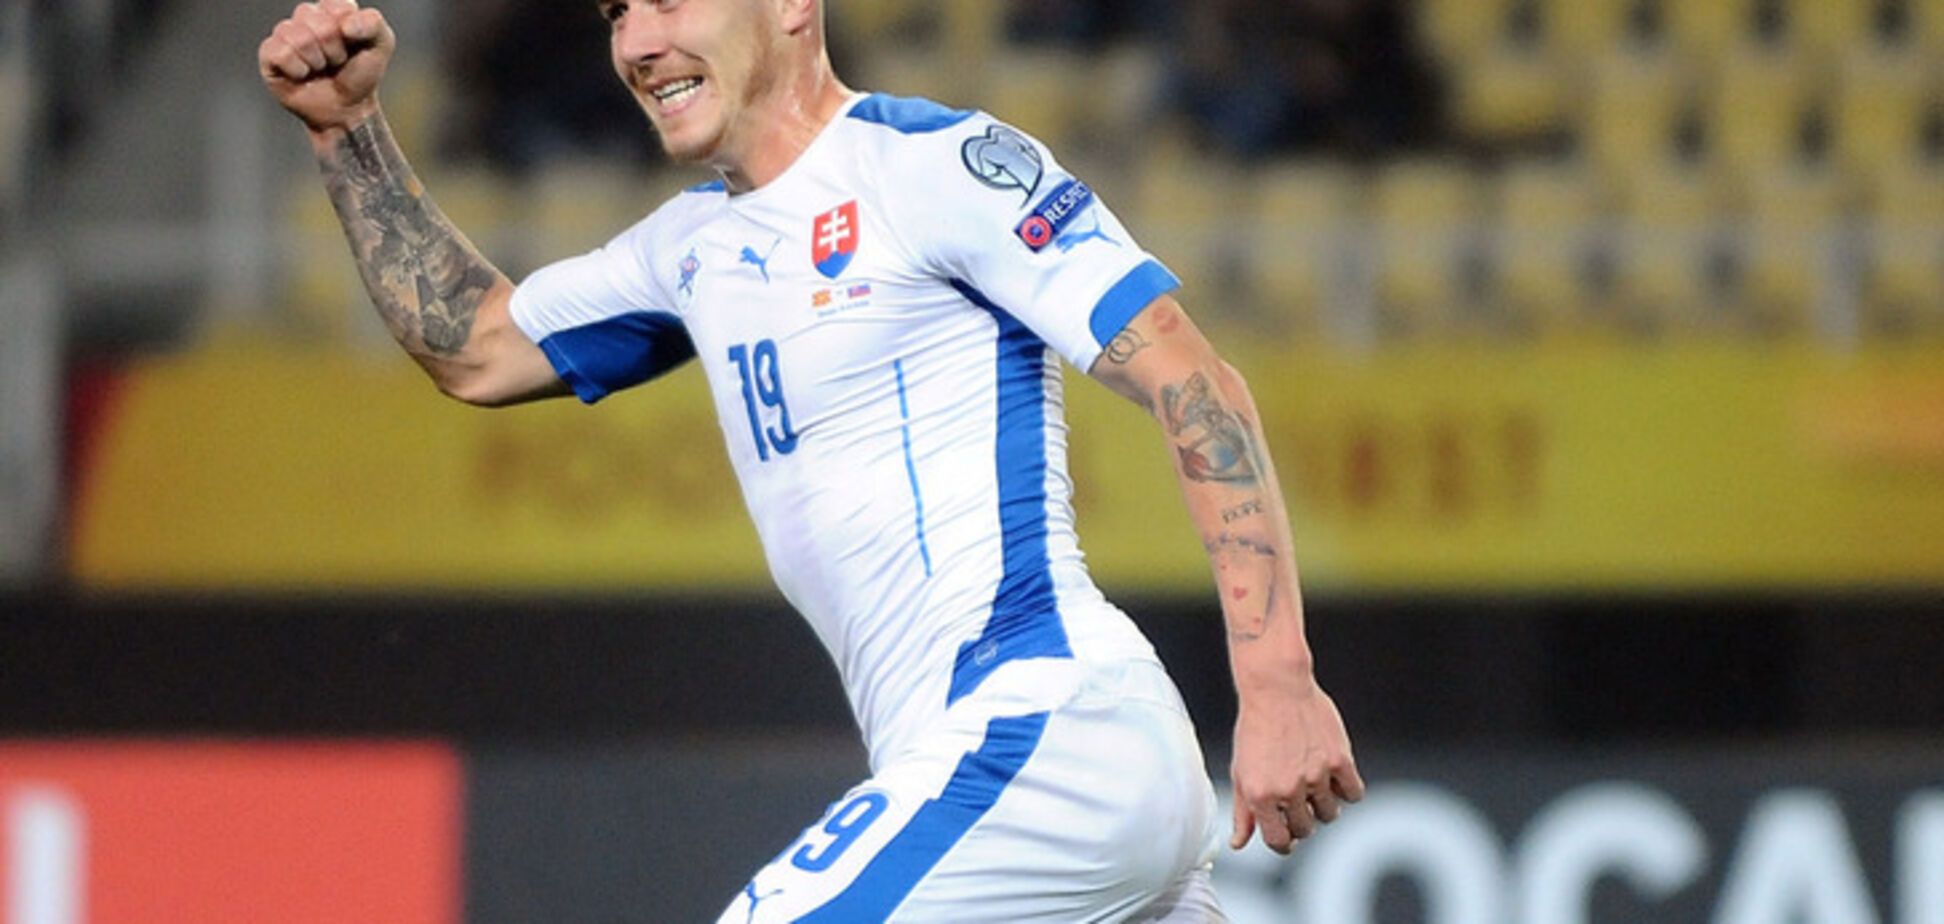 Словацкий футболист забил фантастический гол с центра поля: опубликовано видео